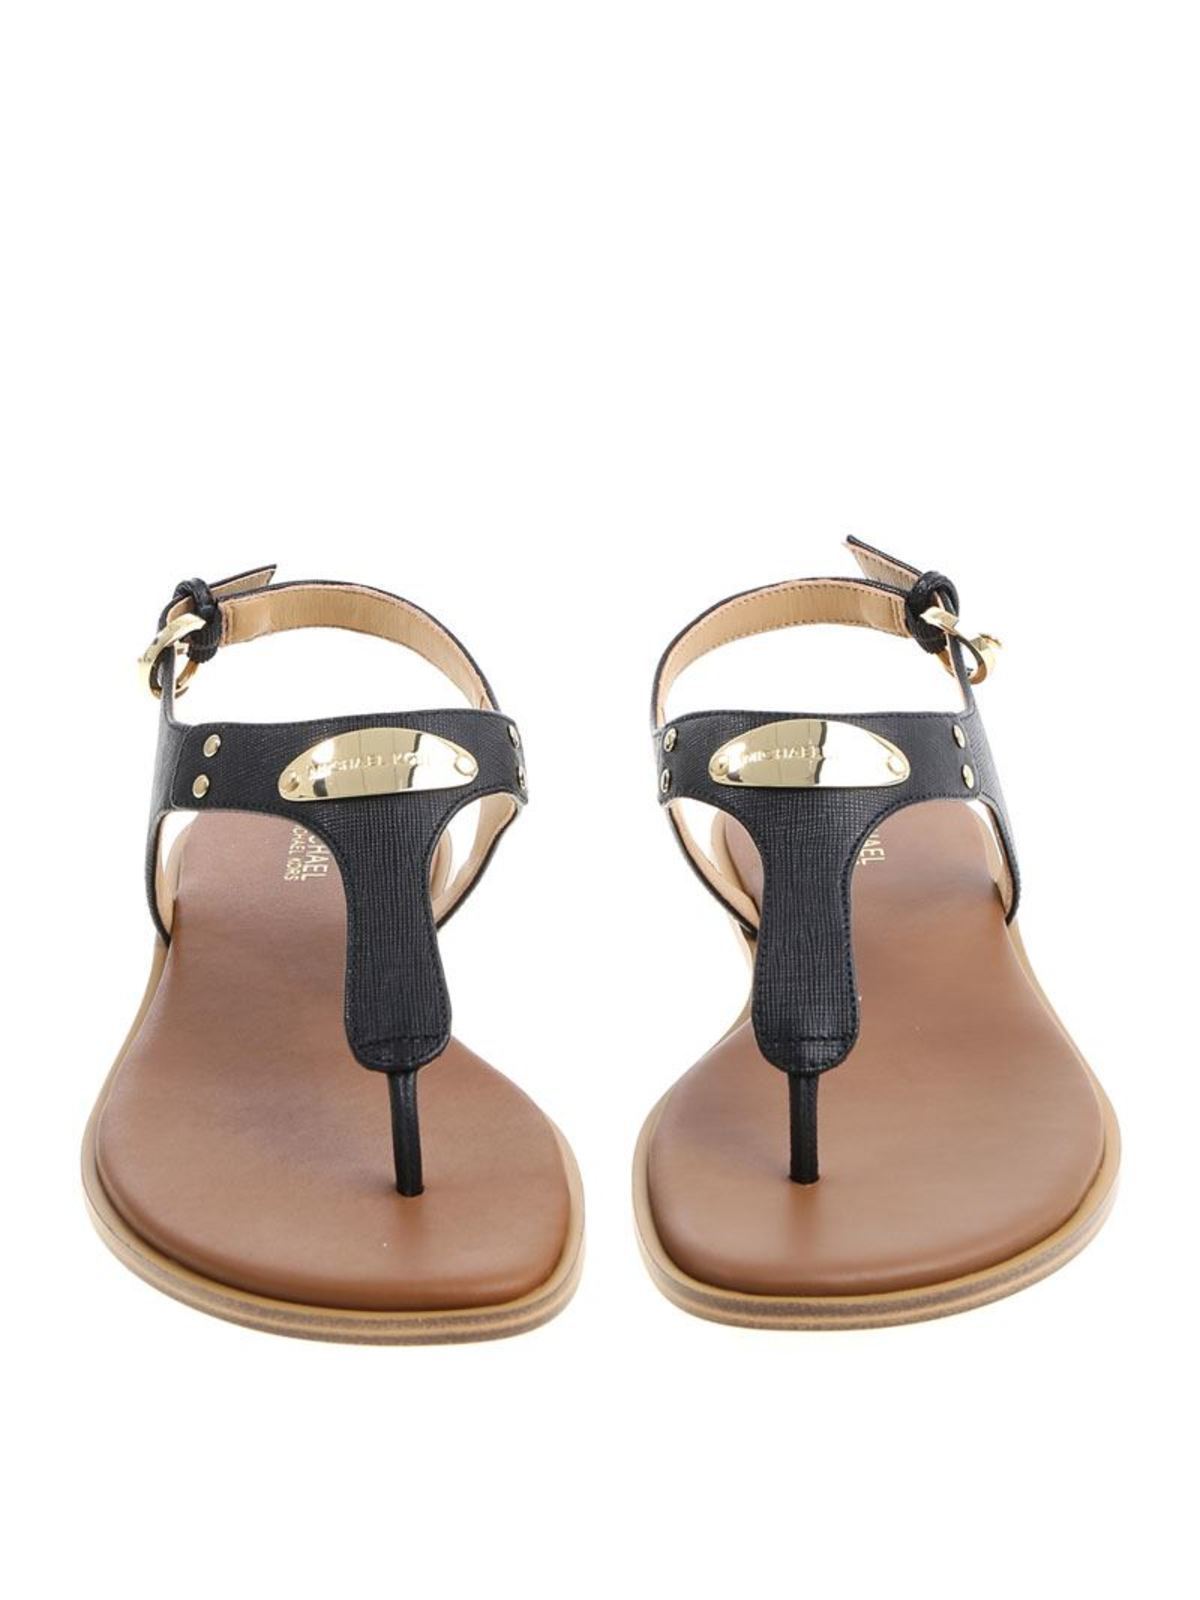 Sandals Michael Kors - MK Plate Thong sandals in black - 40U2MKFA2LBLACK